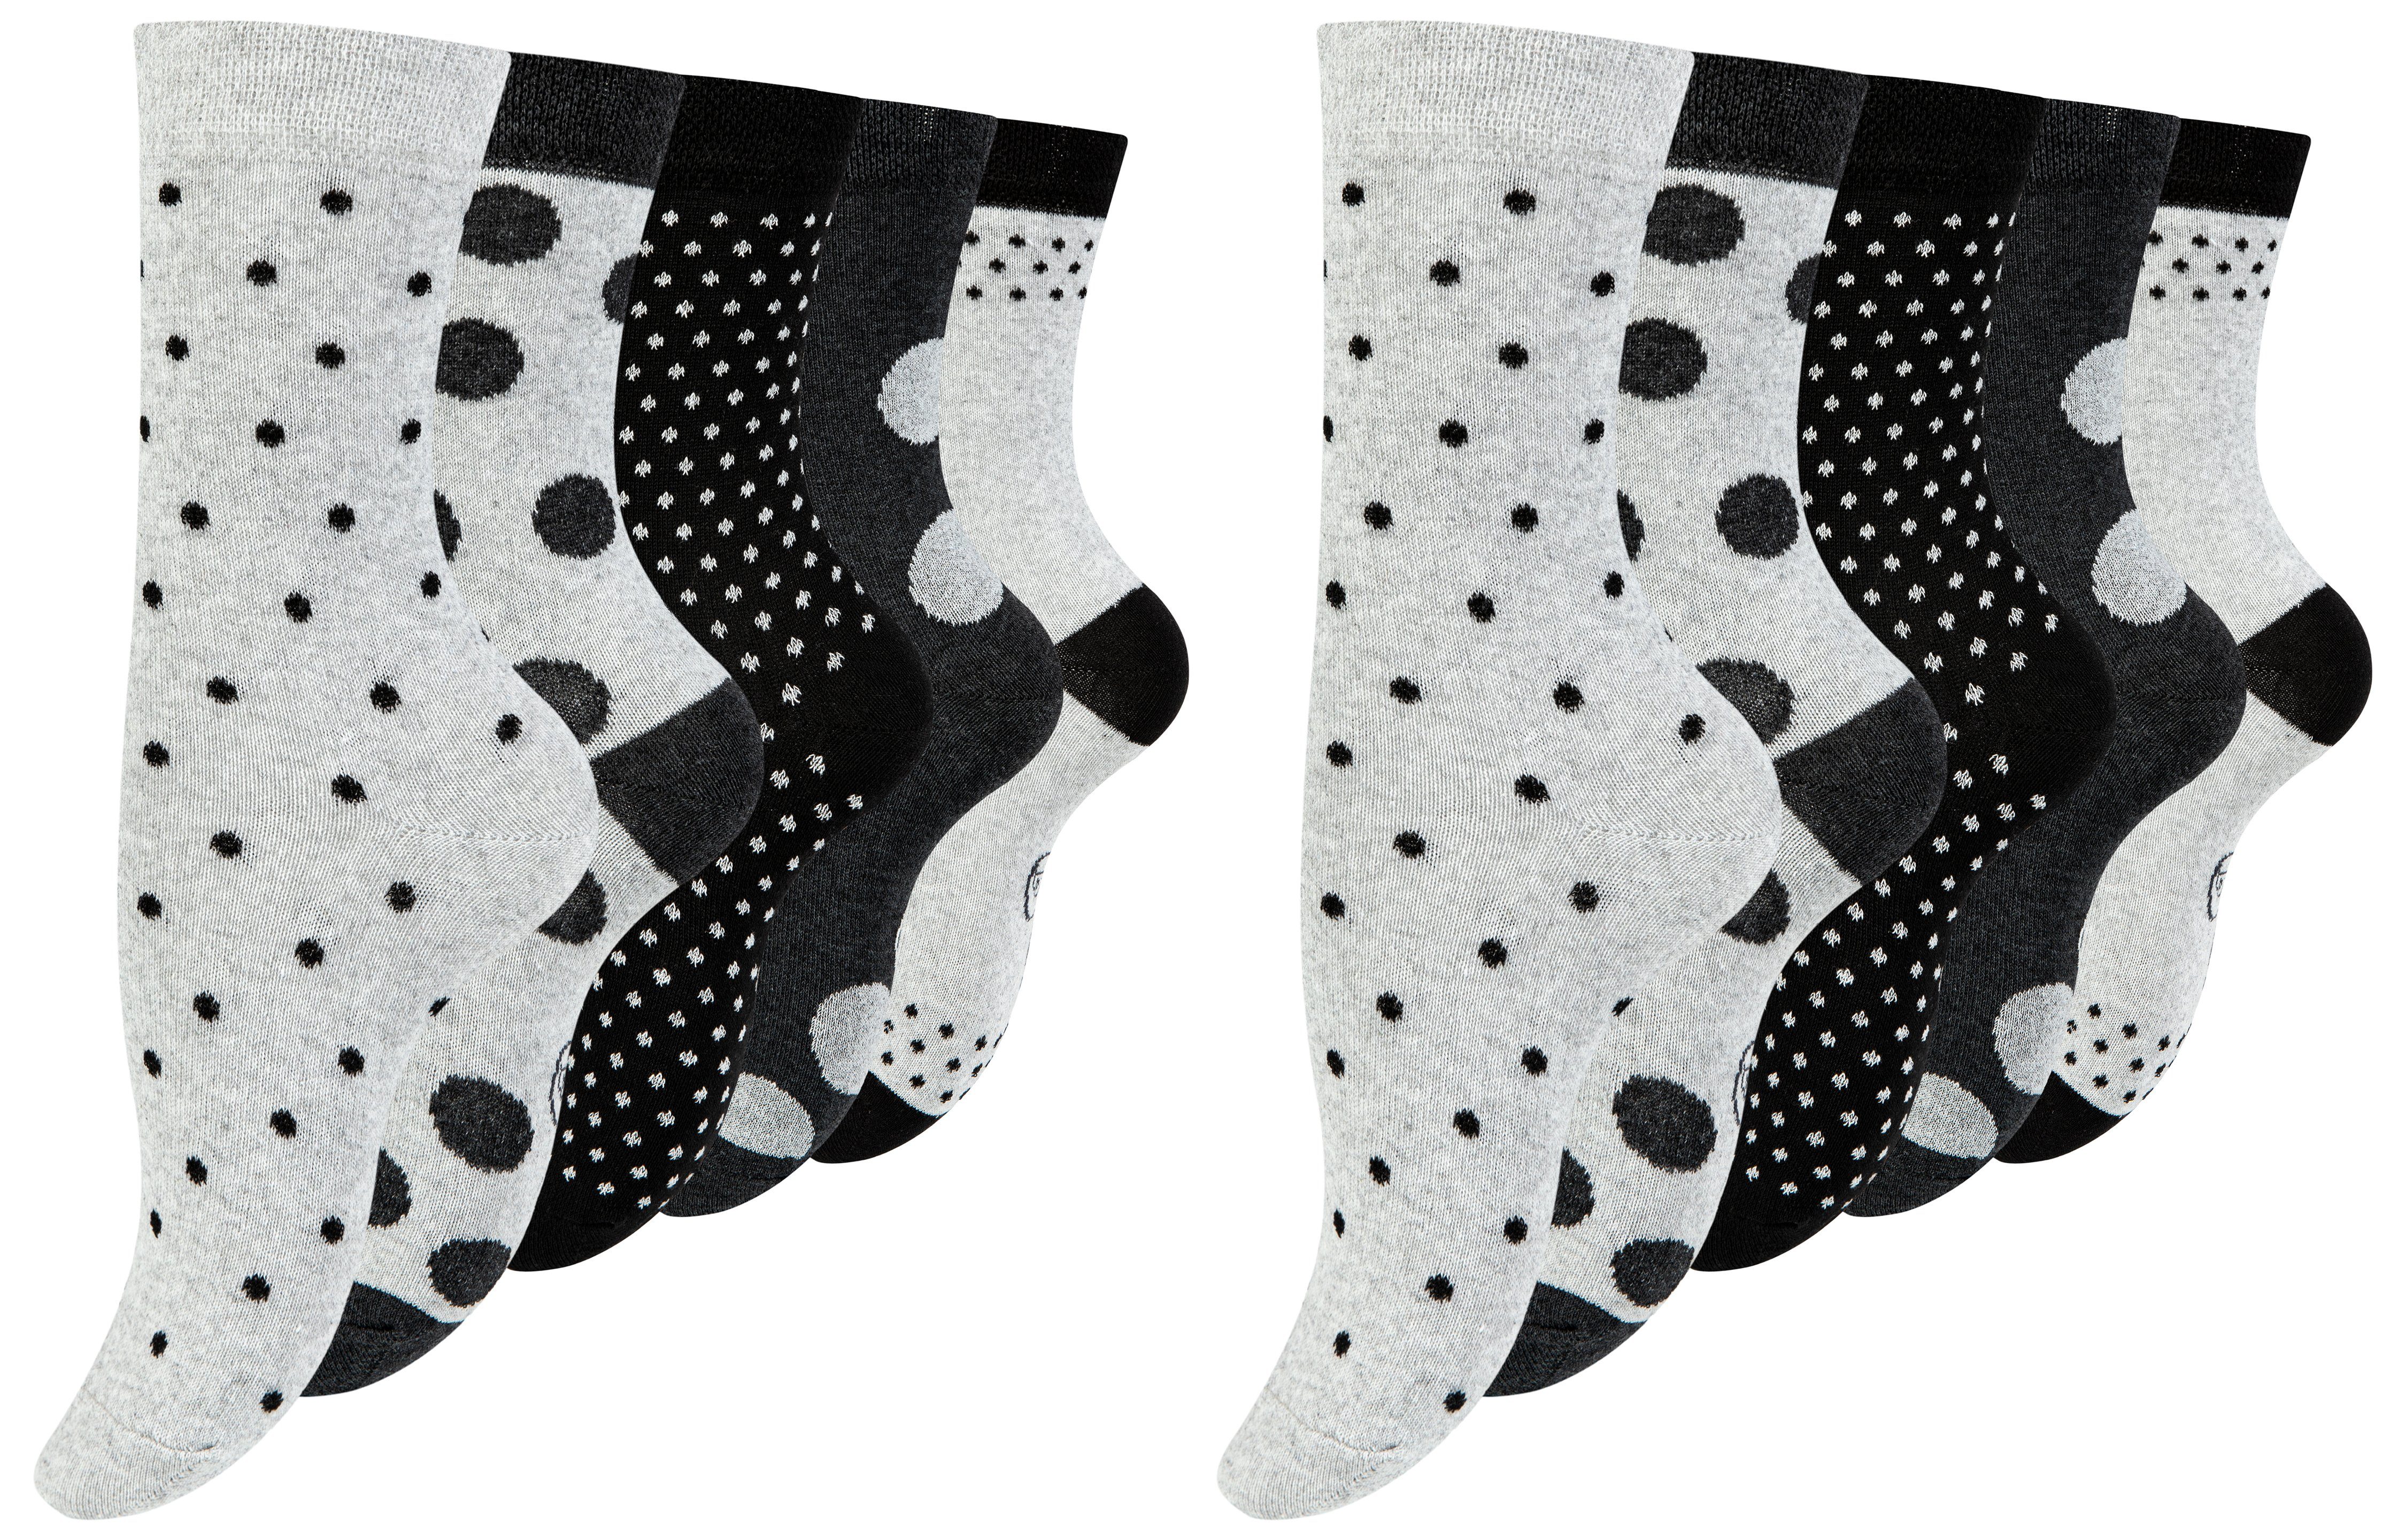 Paolo Renzo Langsocken Baumwolle hochwertiger Atmungsaktive aus gemustert (10-Paar) gepunktet Damen Frauen Socken oder geringelt Socken Casual